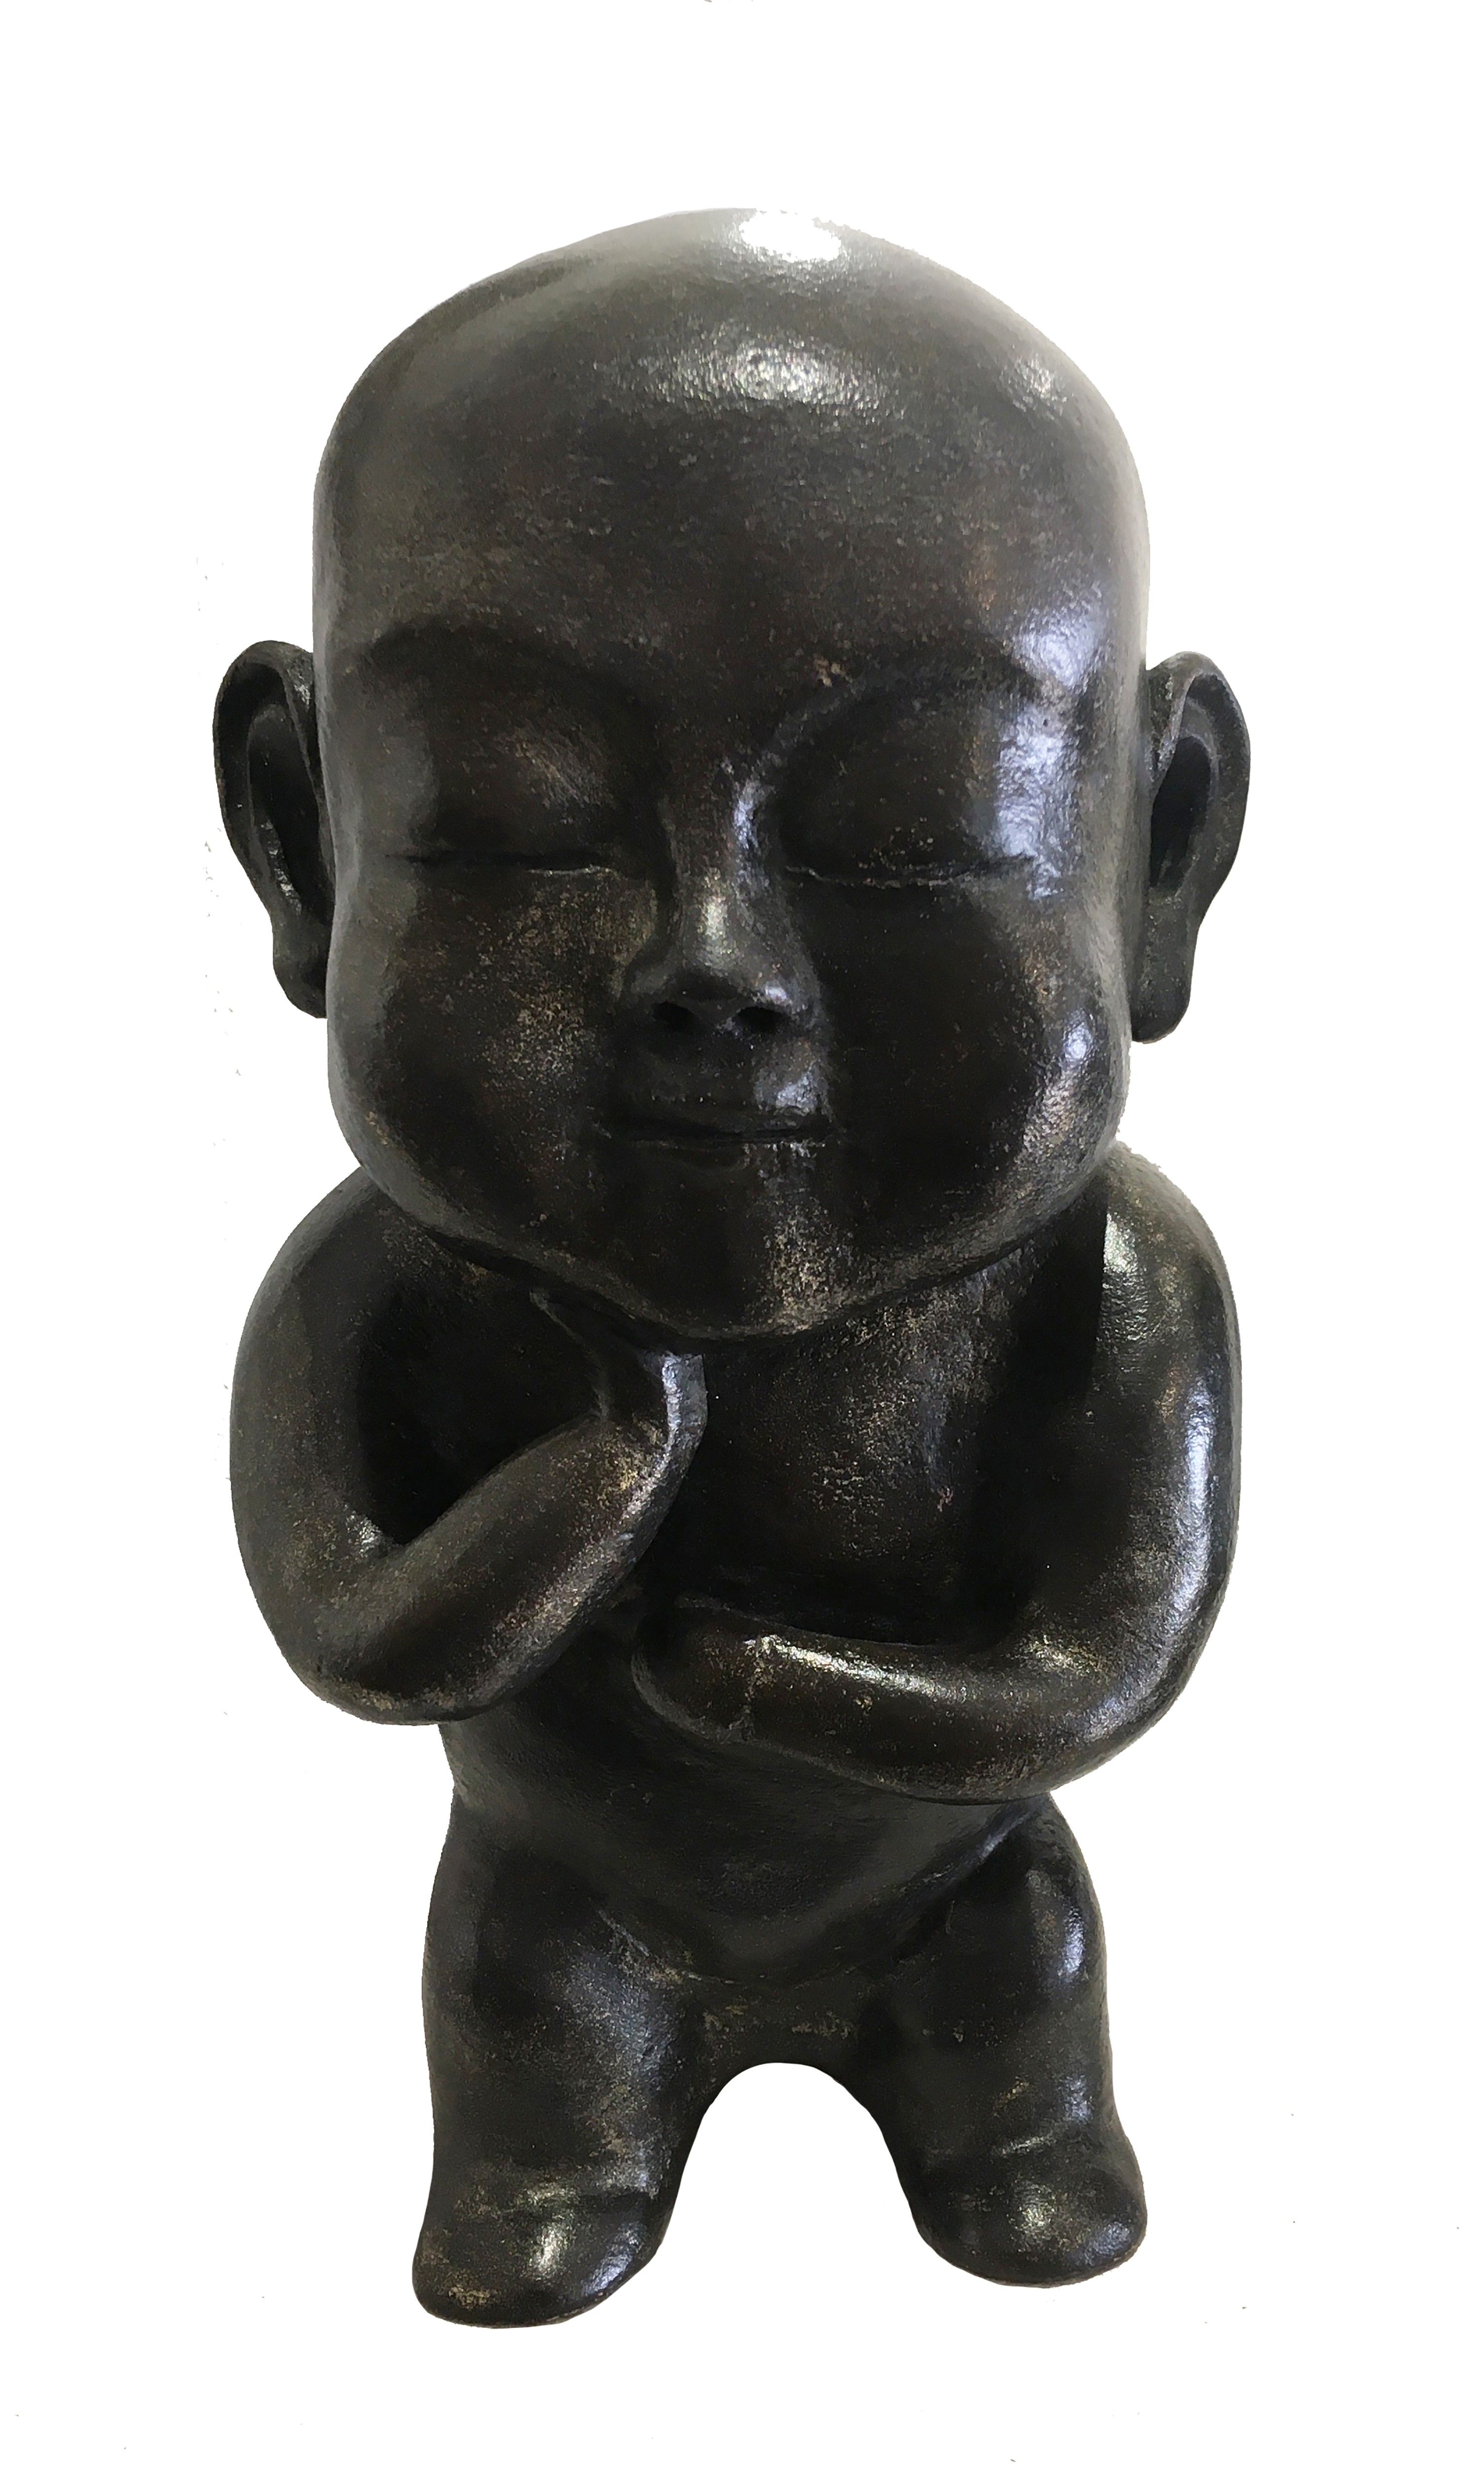 Big Baby 6 by Anne-Marie Picard, 2020 | Sculpture | Artsper (335599)